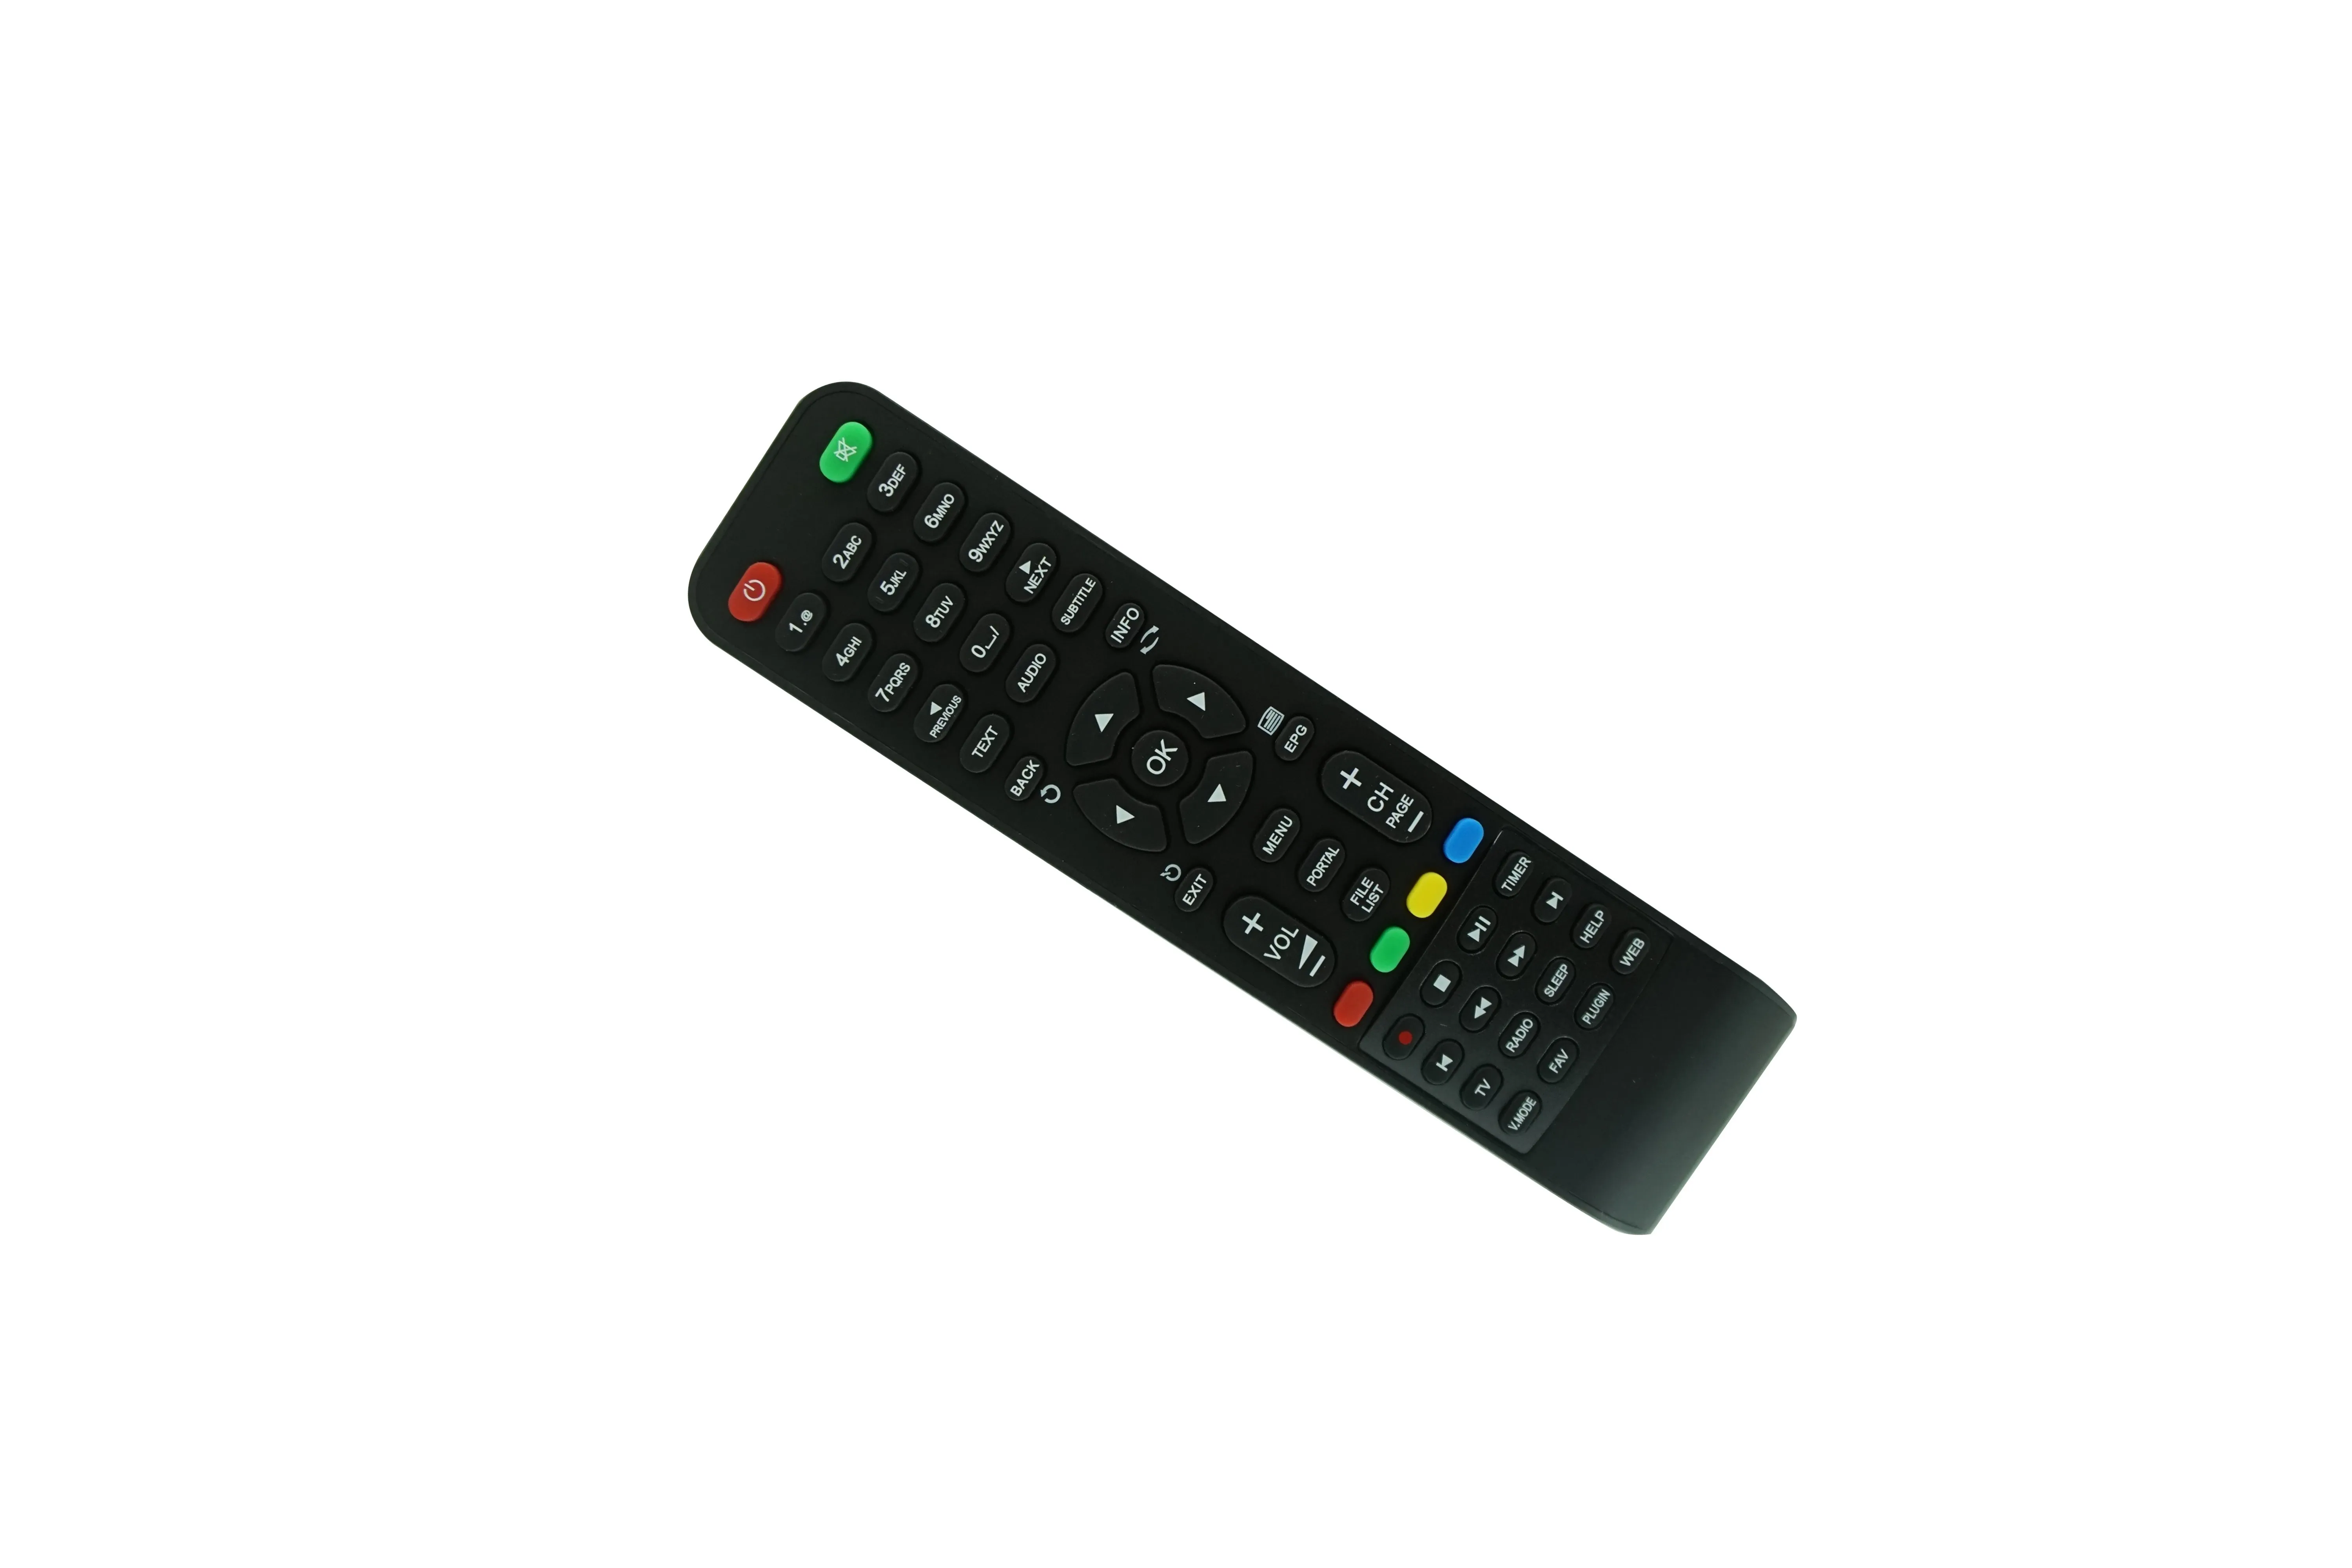 Zgemma TWIN 4K IPTV Box UHD Receiver Remote Control For Pc For H7, H5.2TC,  T2, W2C, K9, And H11S/H9S From Hclampsc, $13.06